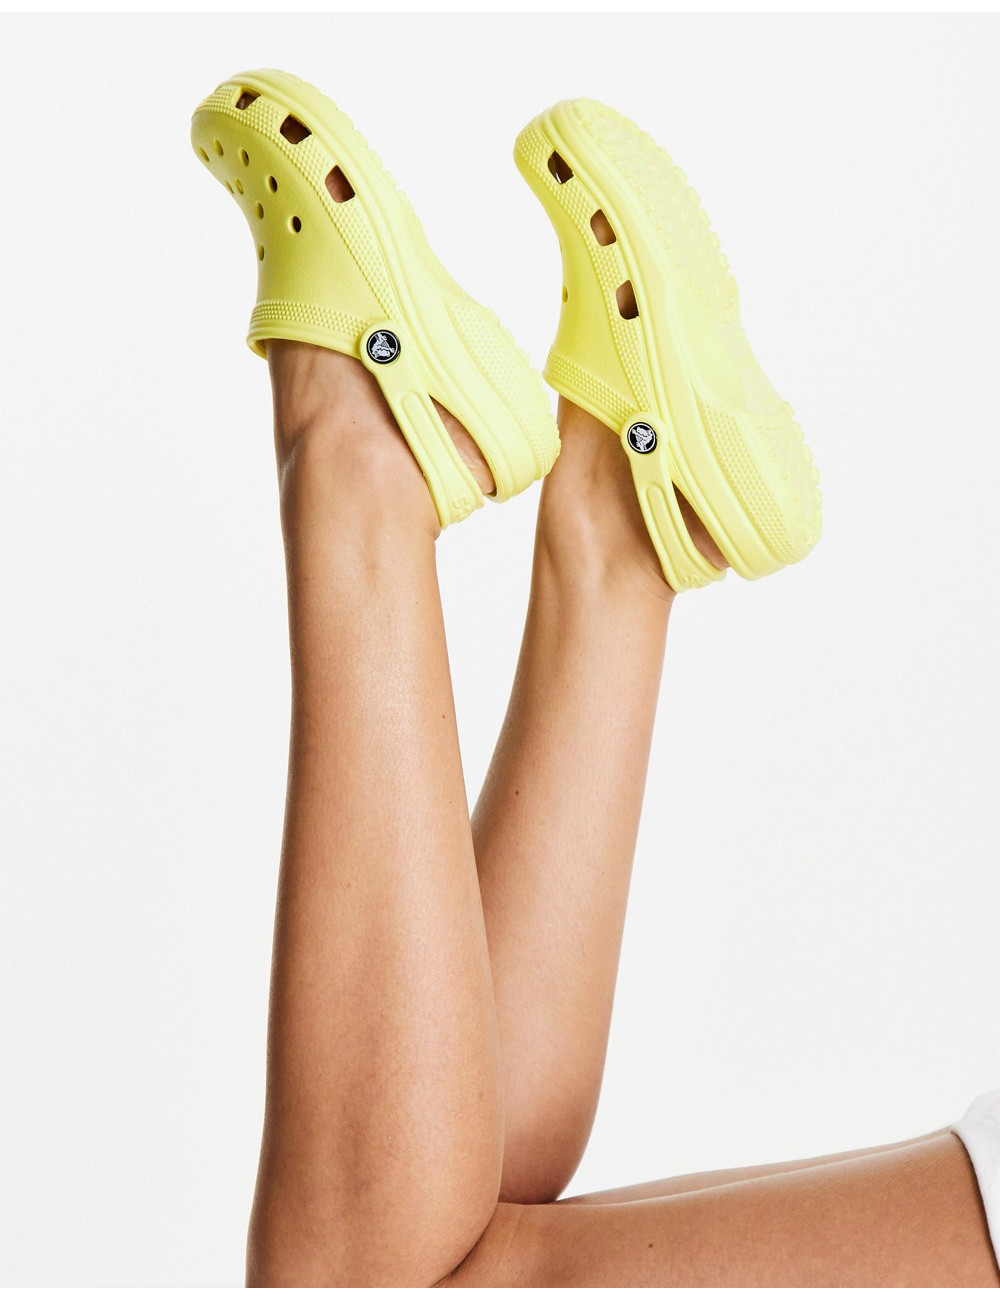 Crocs classic shoes in banana